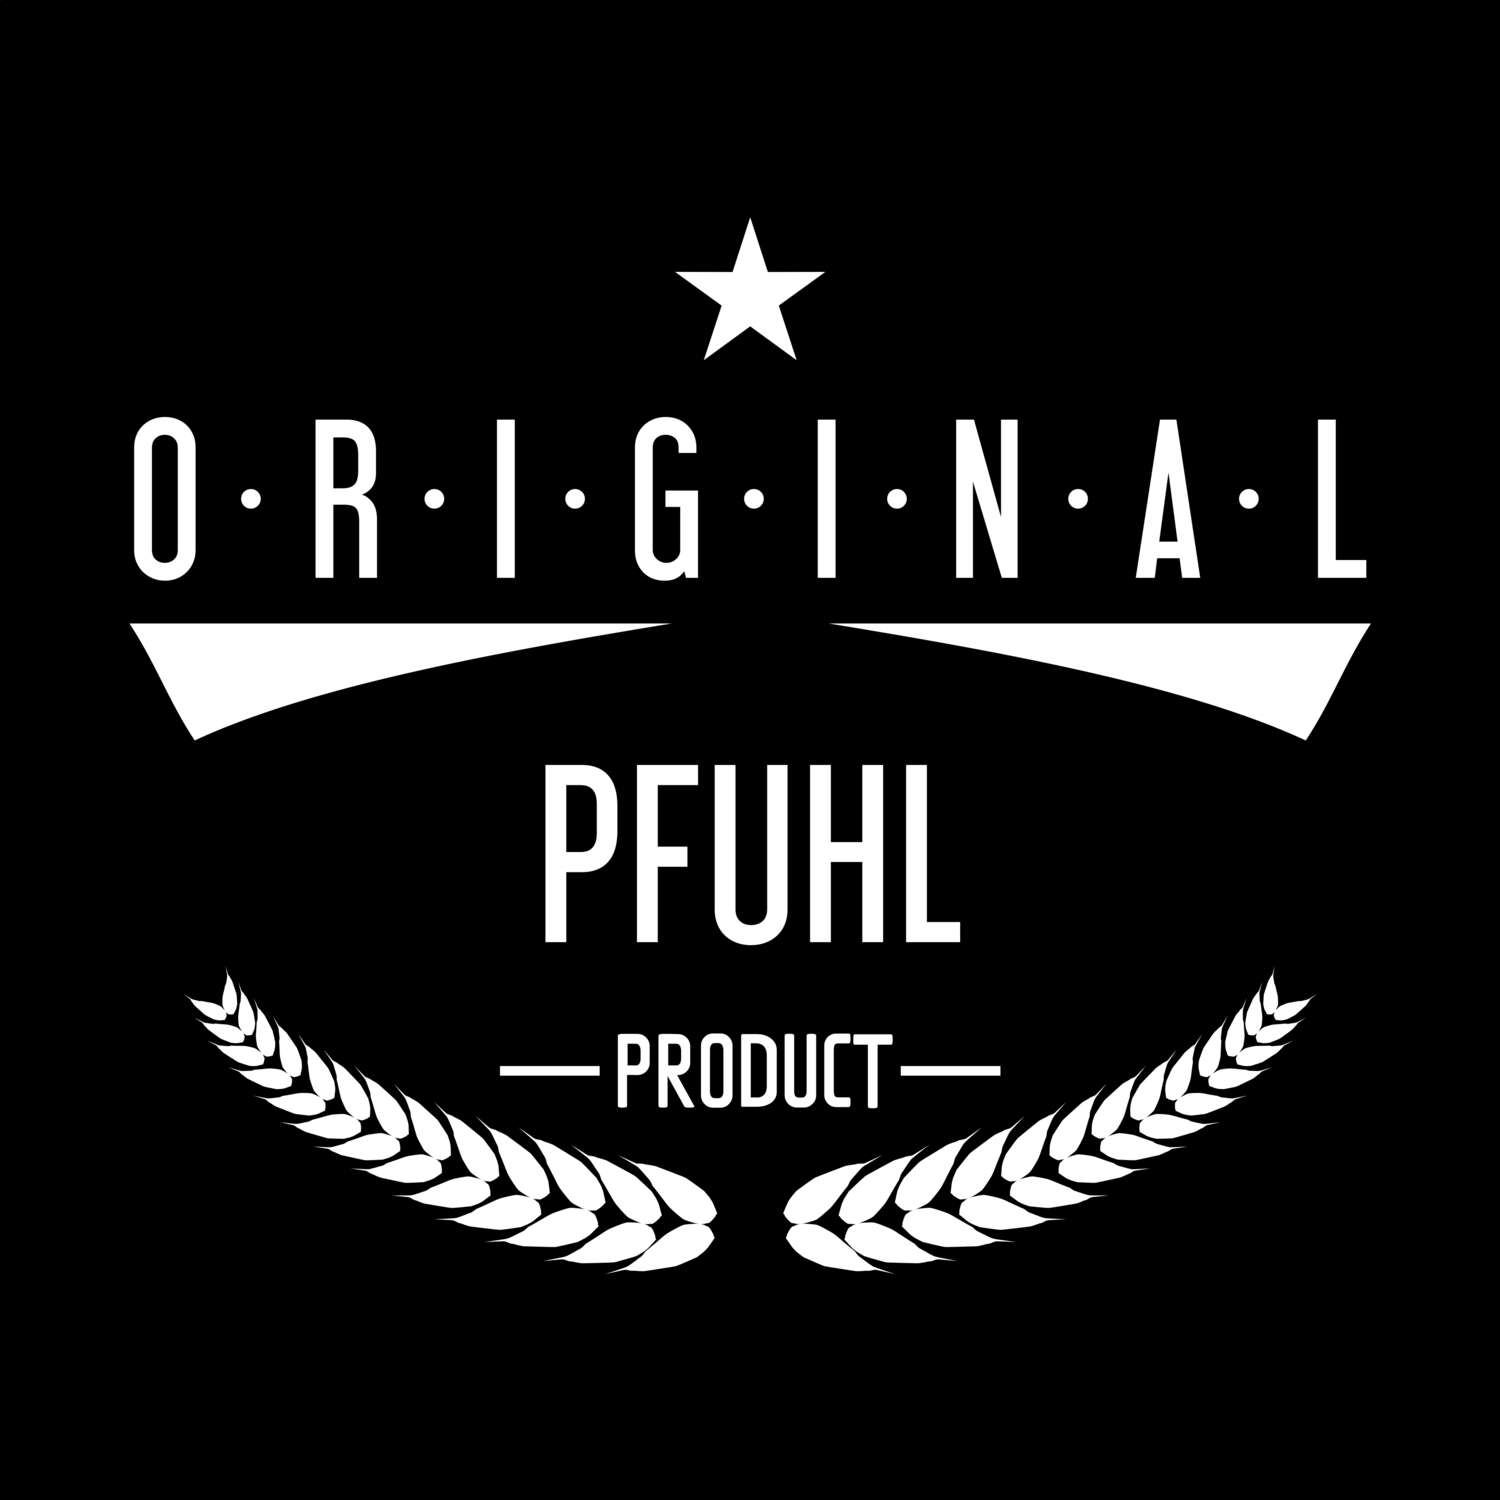 Pfuhl T-Shirt »Original Product«